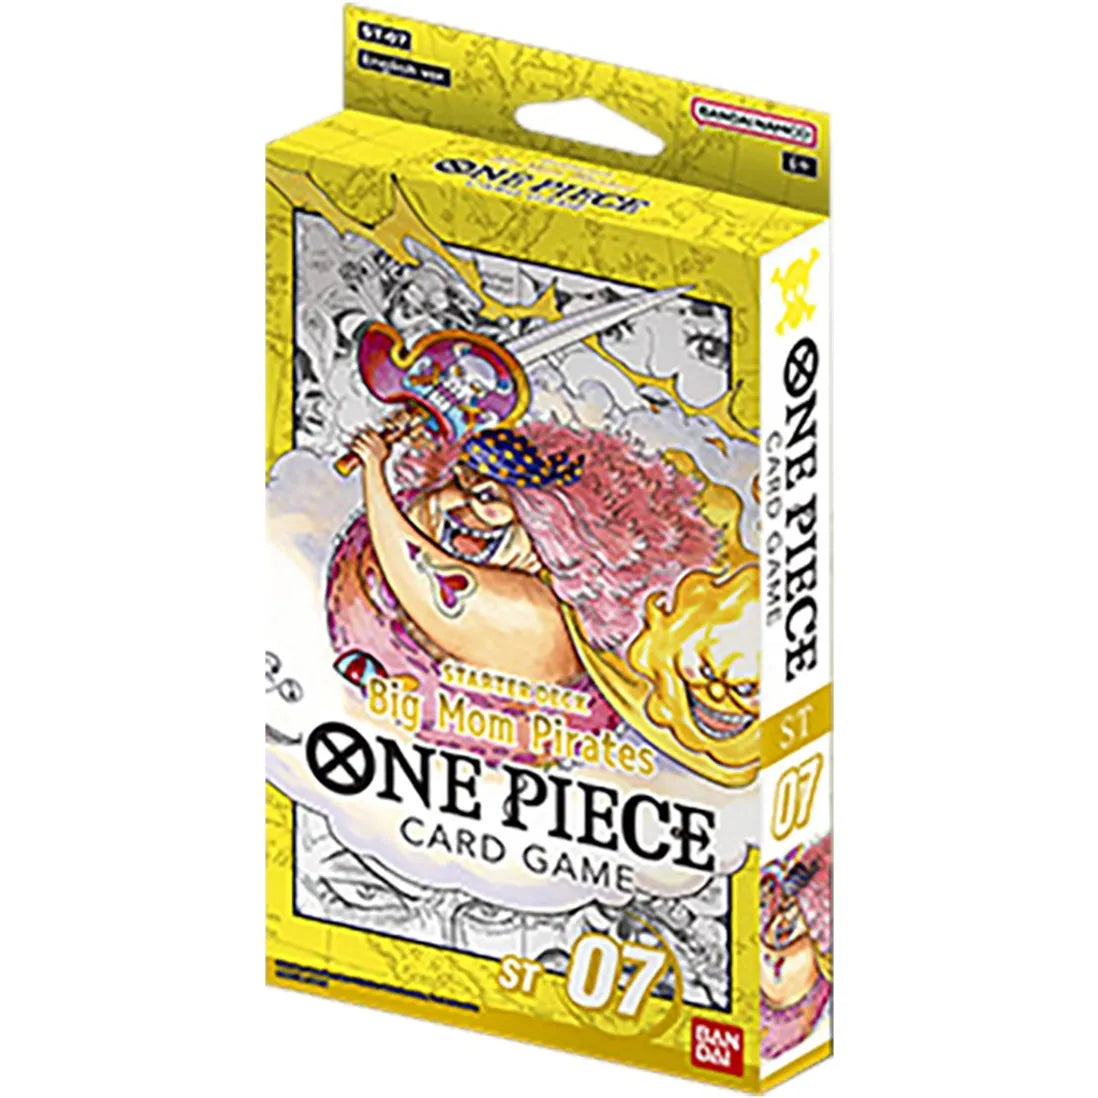 One Piece (Card Game)  TCG Big Mom Pirates Starter Deck